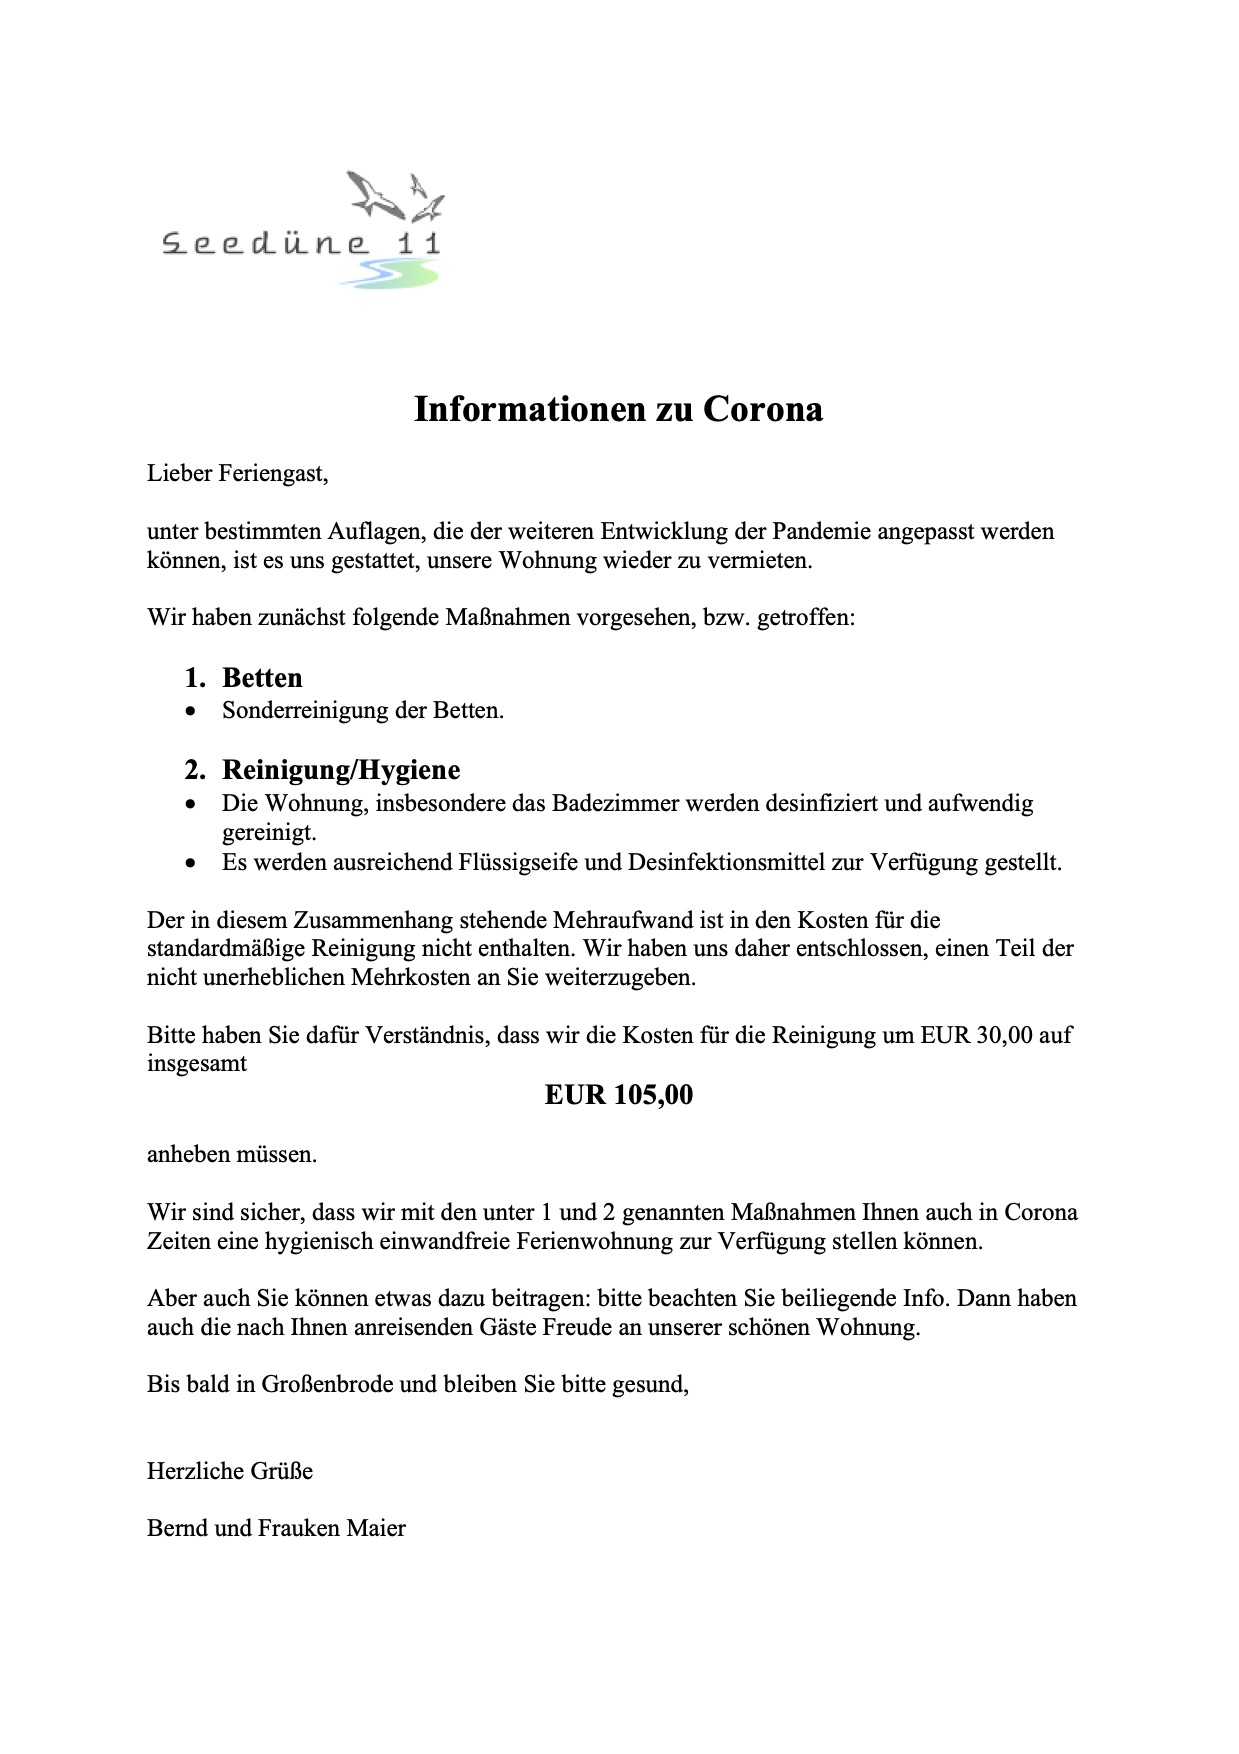 Informationen zu Corona 1-3